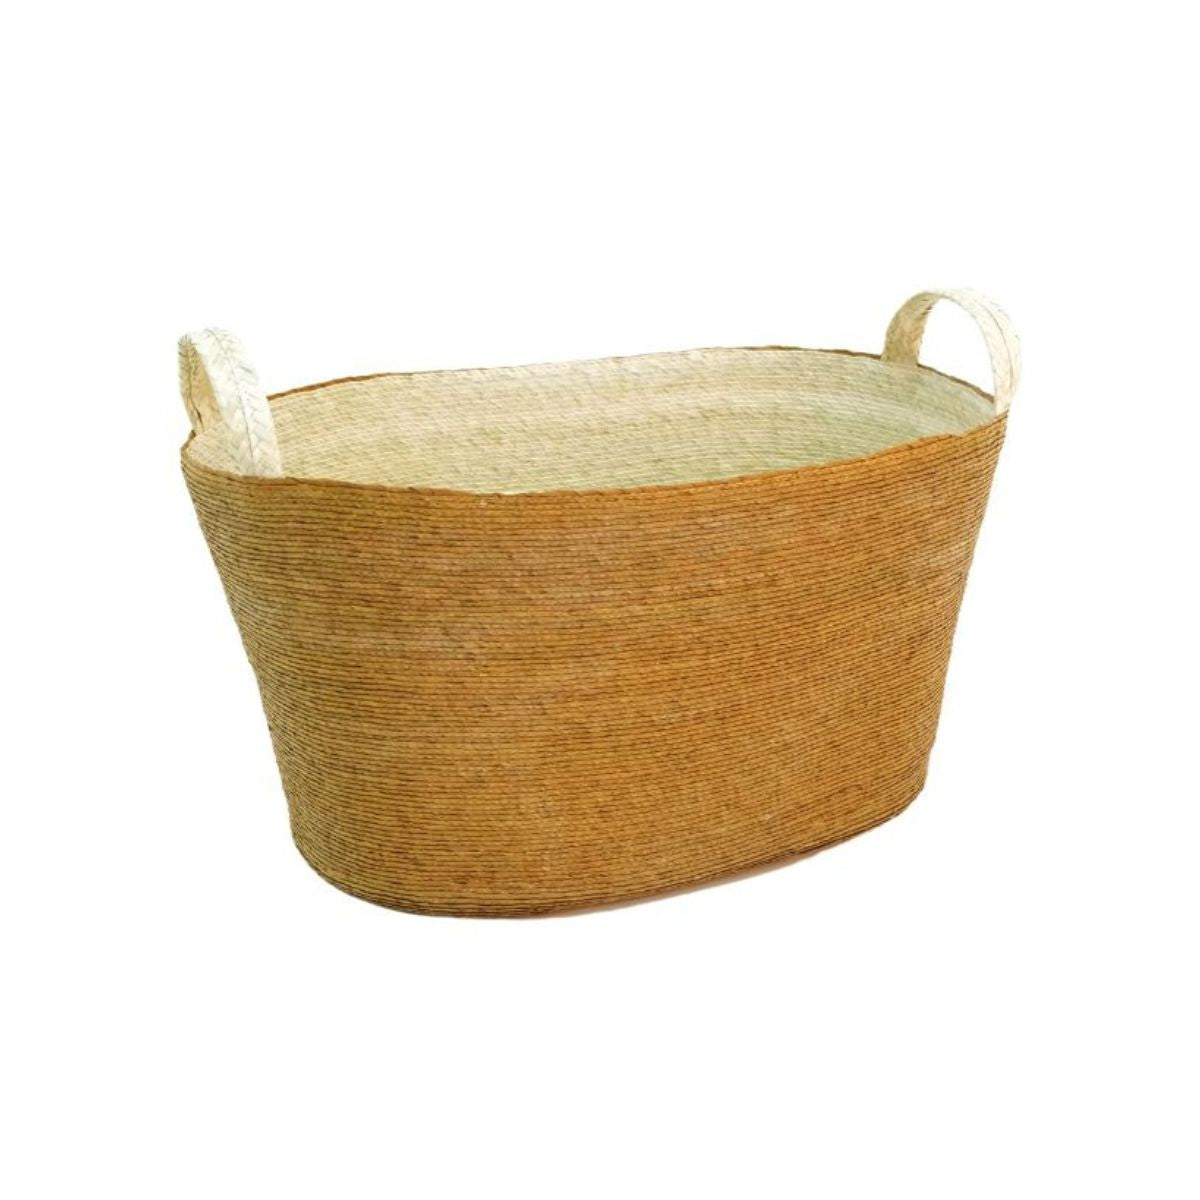 Handmade Oval Floor Basket with Handles in Dorado Mustard